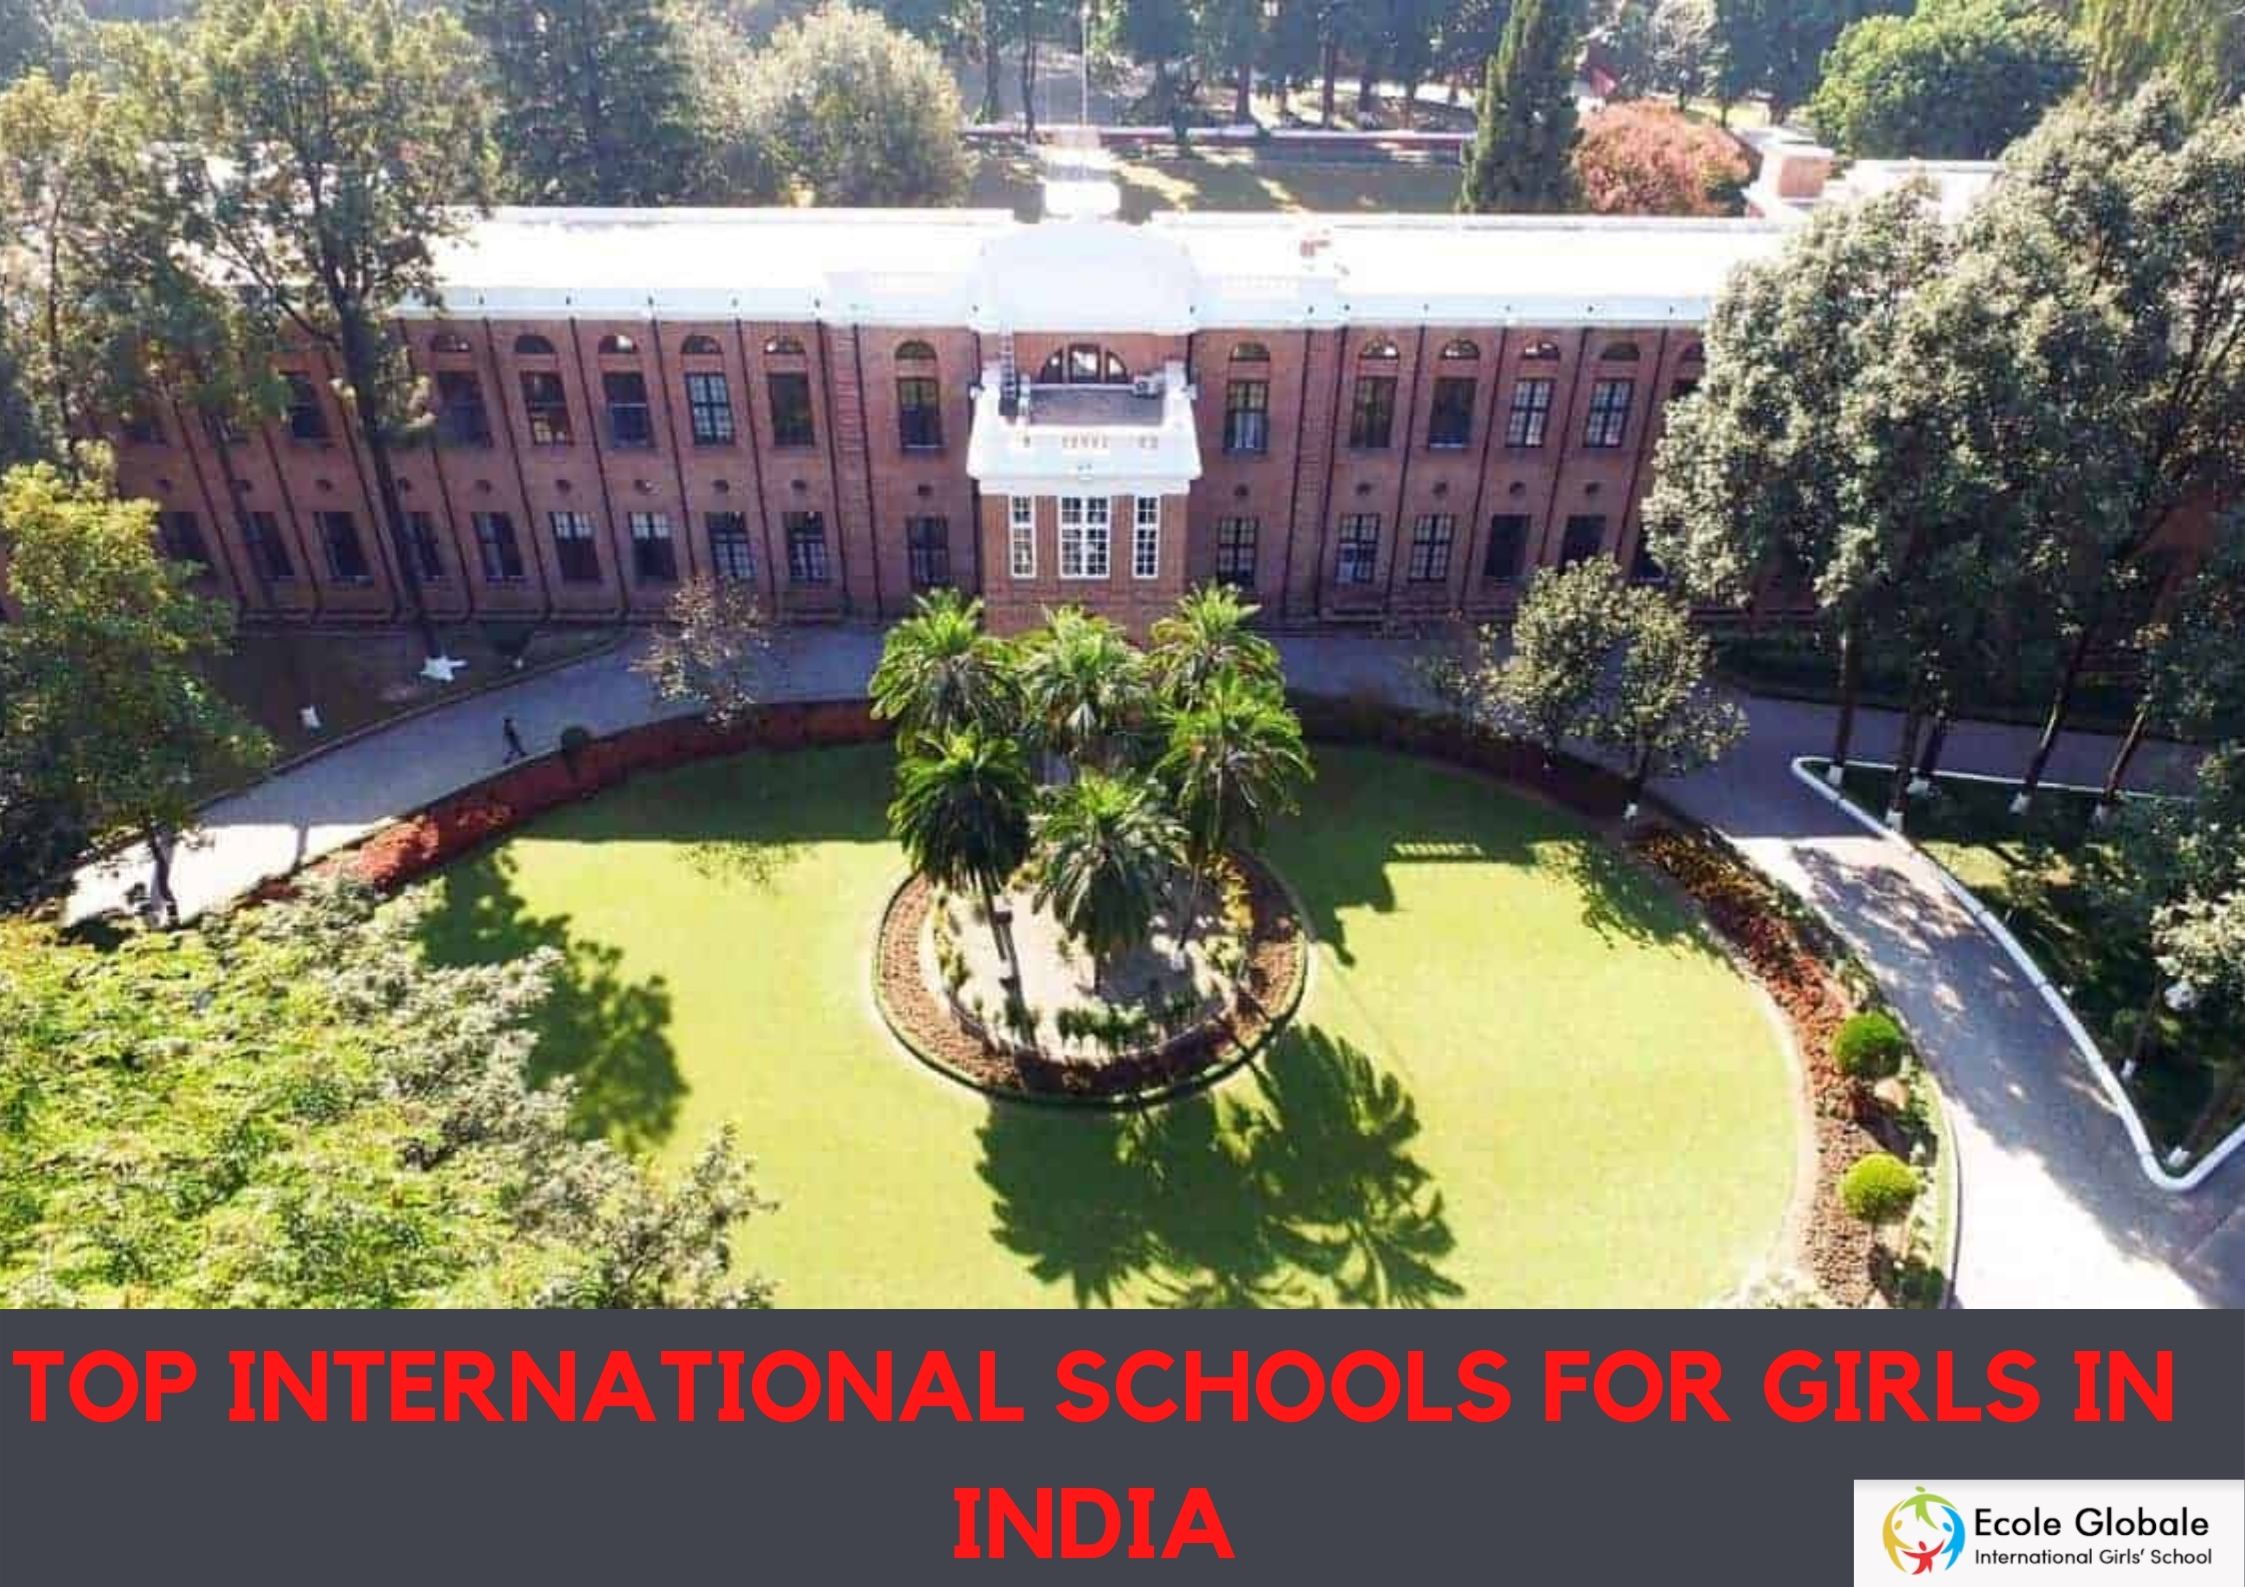 TOP INTERNATIONAL SCHOOLS FOR GIRLS IN INDIA